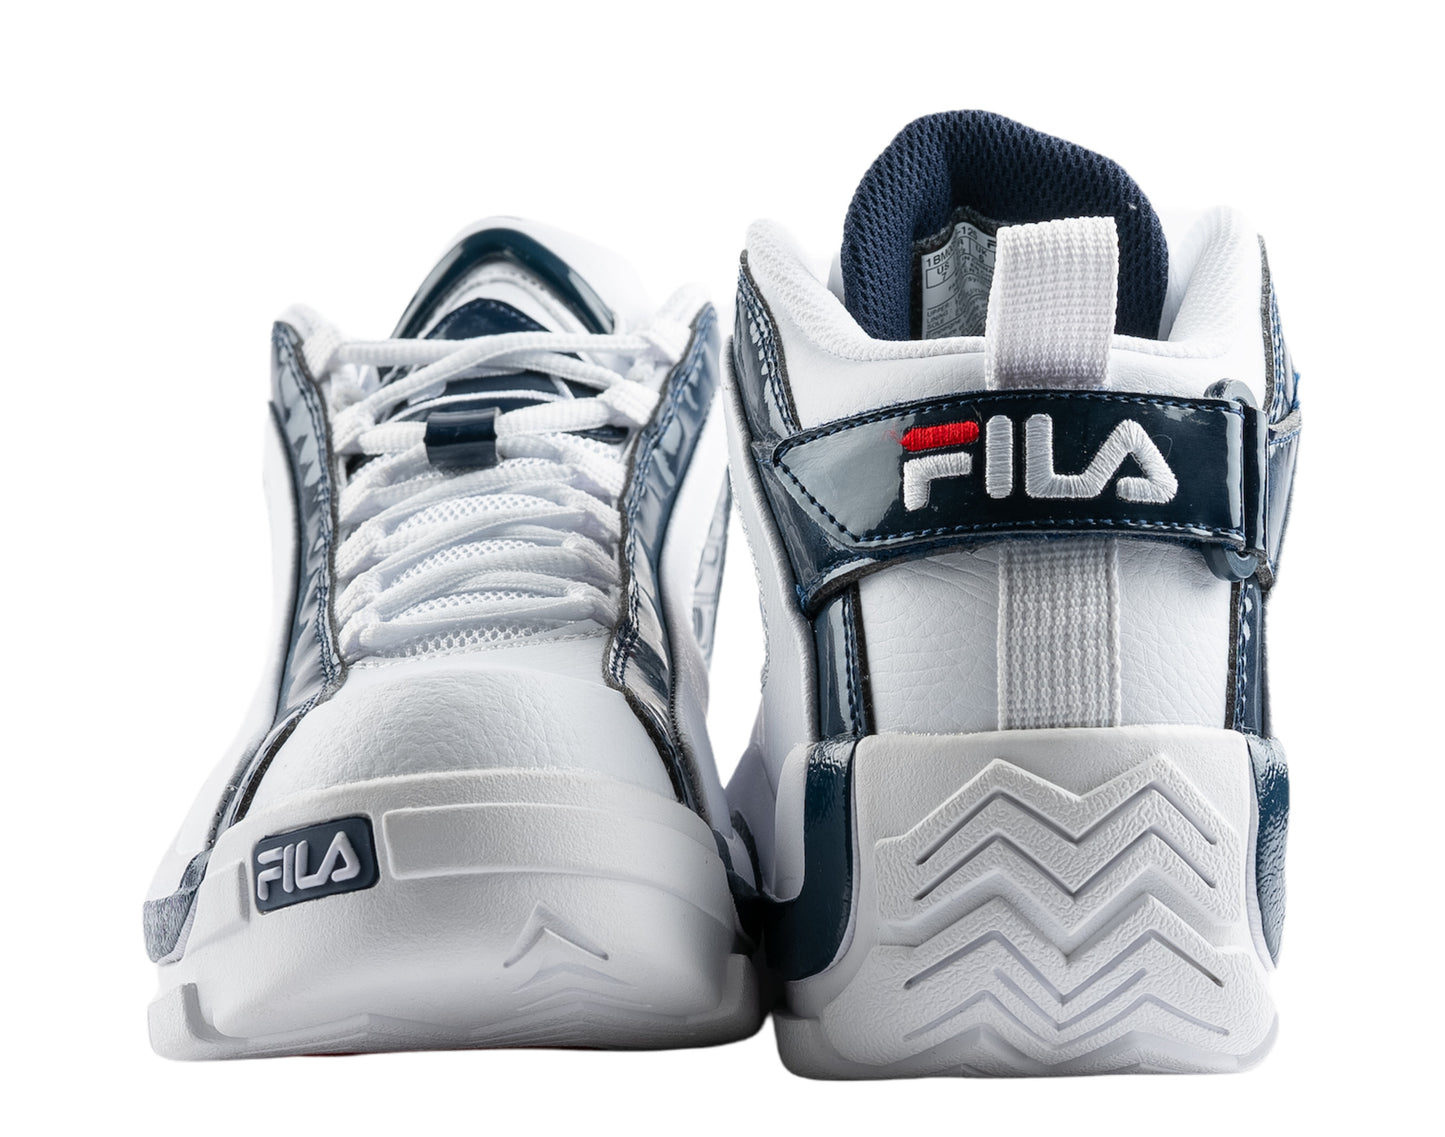 Fila Grant Hill 2 Big Kids' Basketball Shoes